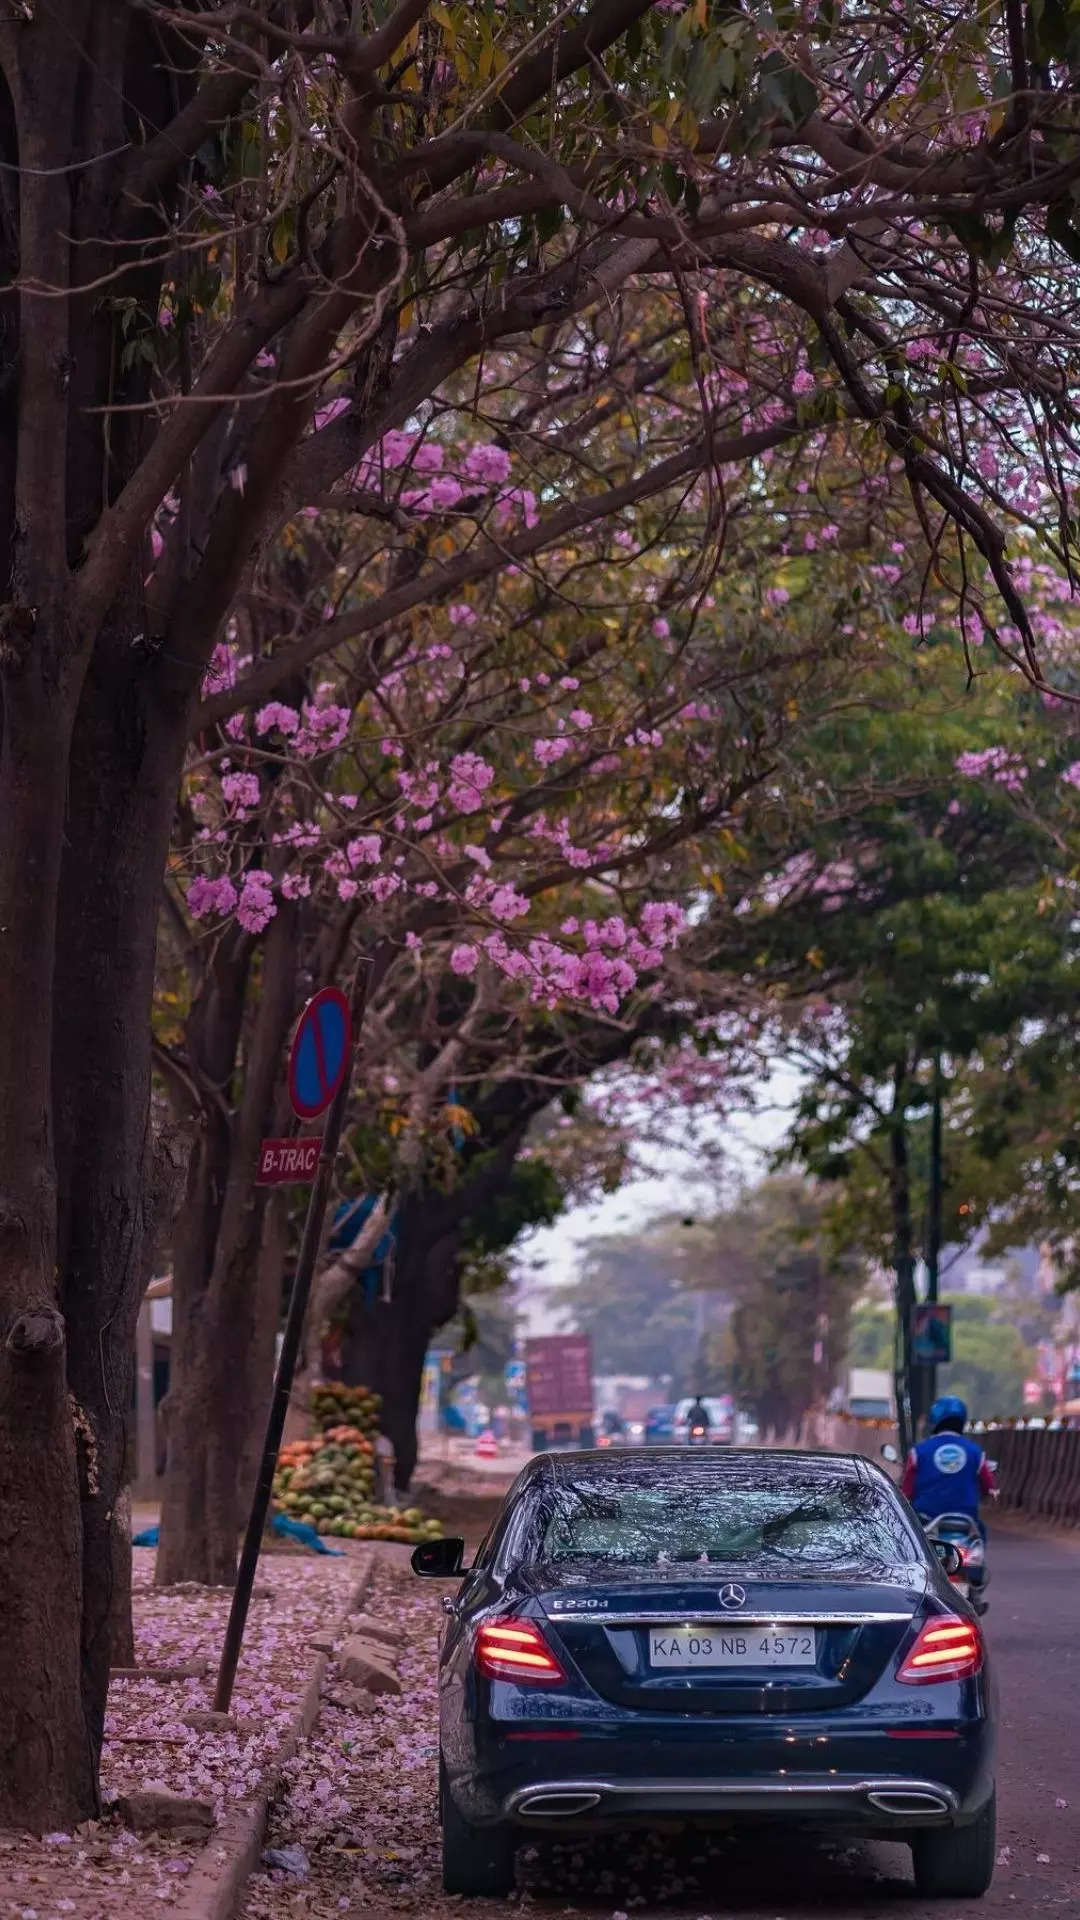 Bengaluru streets turn pink with Cherry Blossom-like flowers